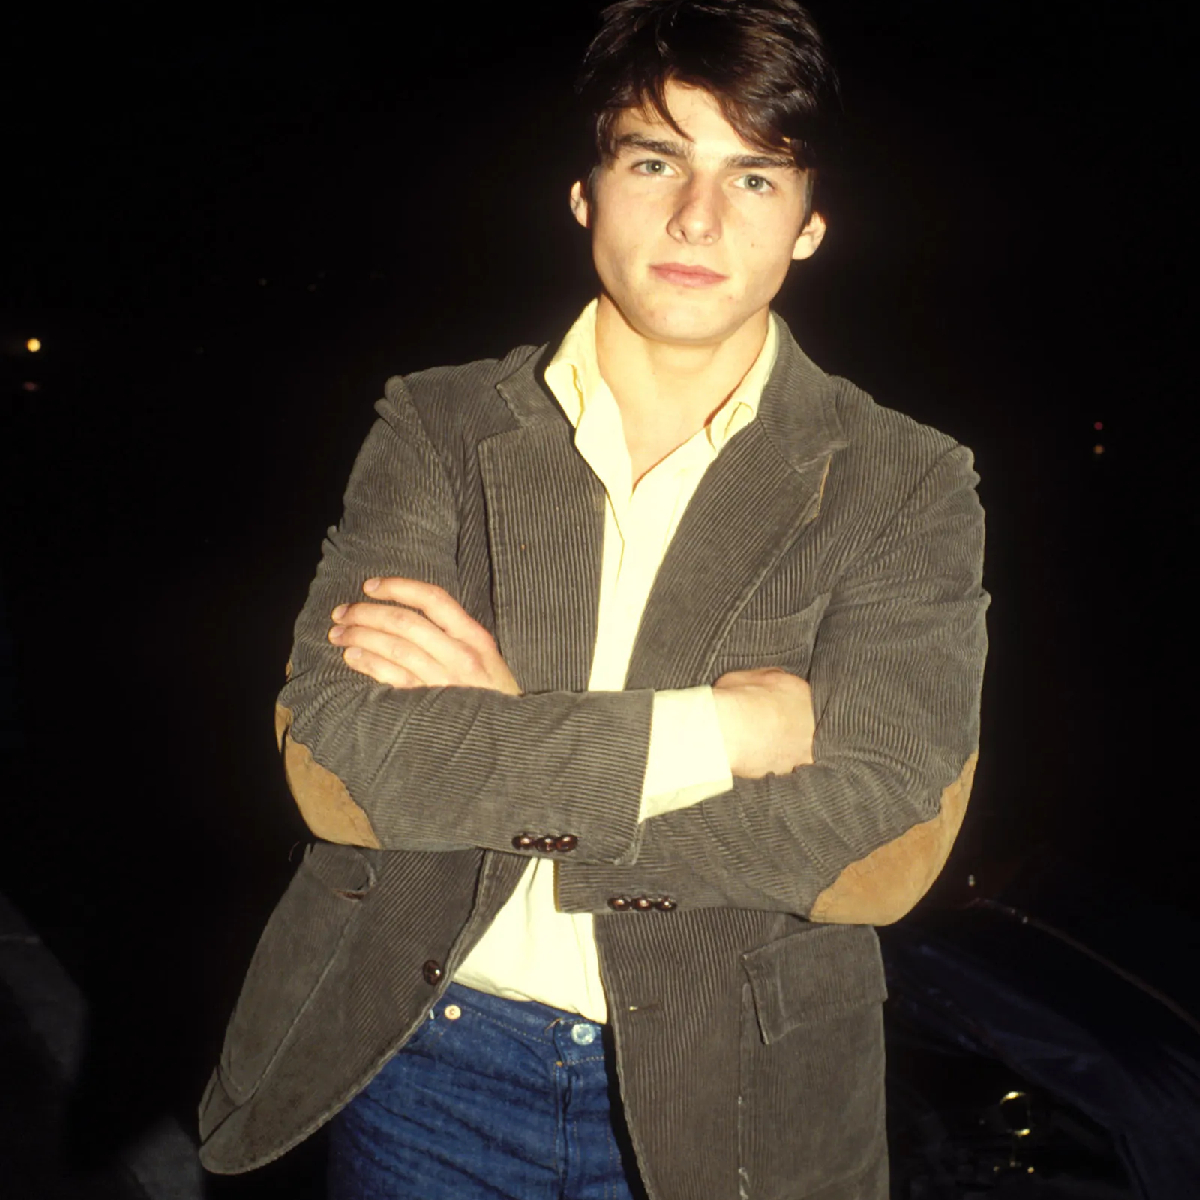 Tom Cruise in 1981